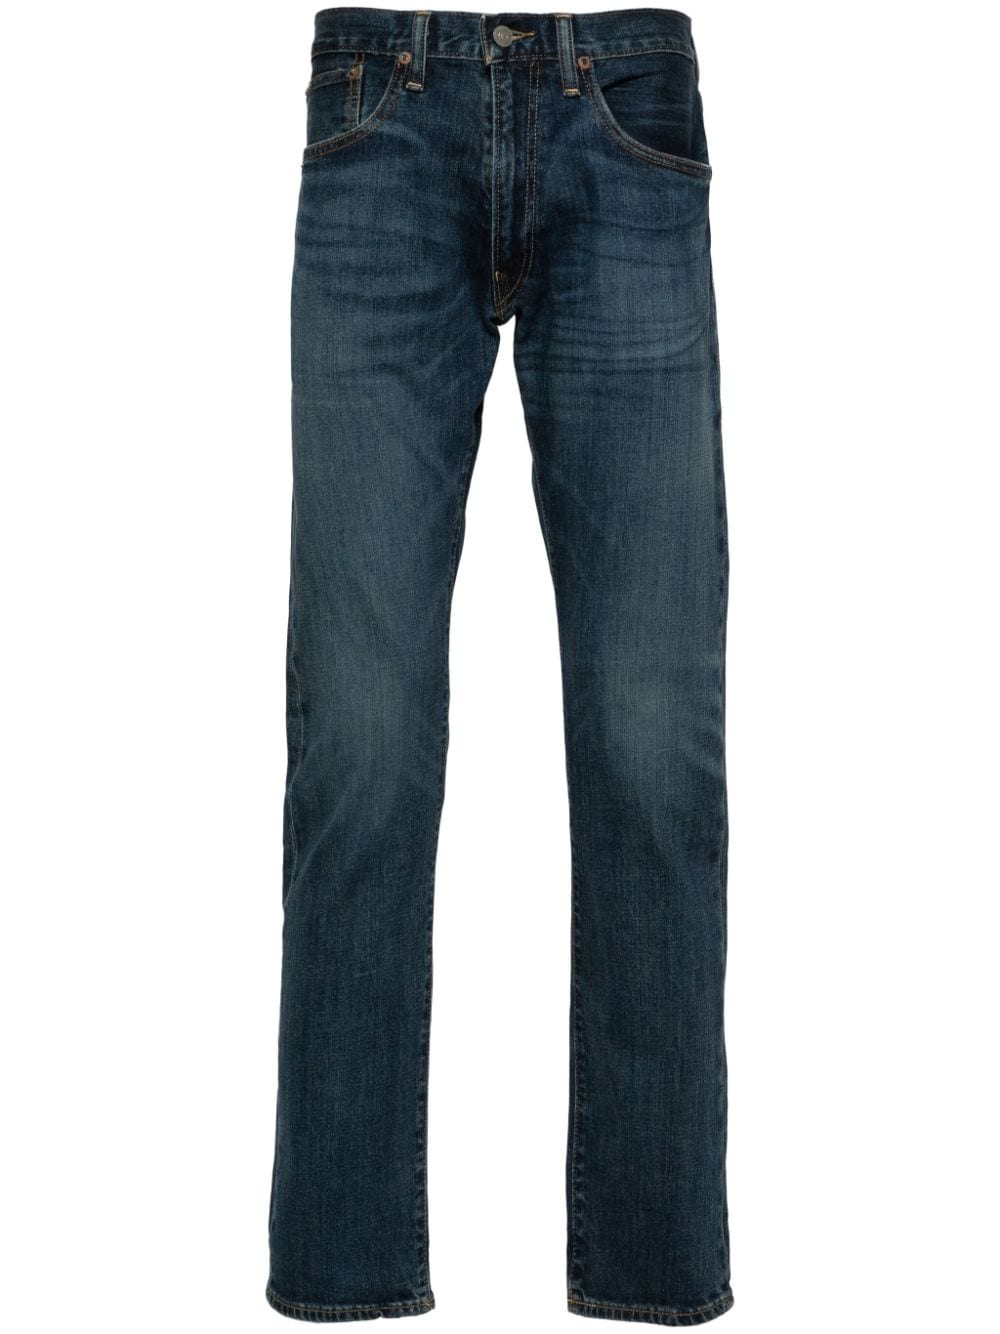 Varick low-rise tapered denim jeans